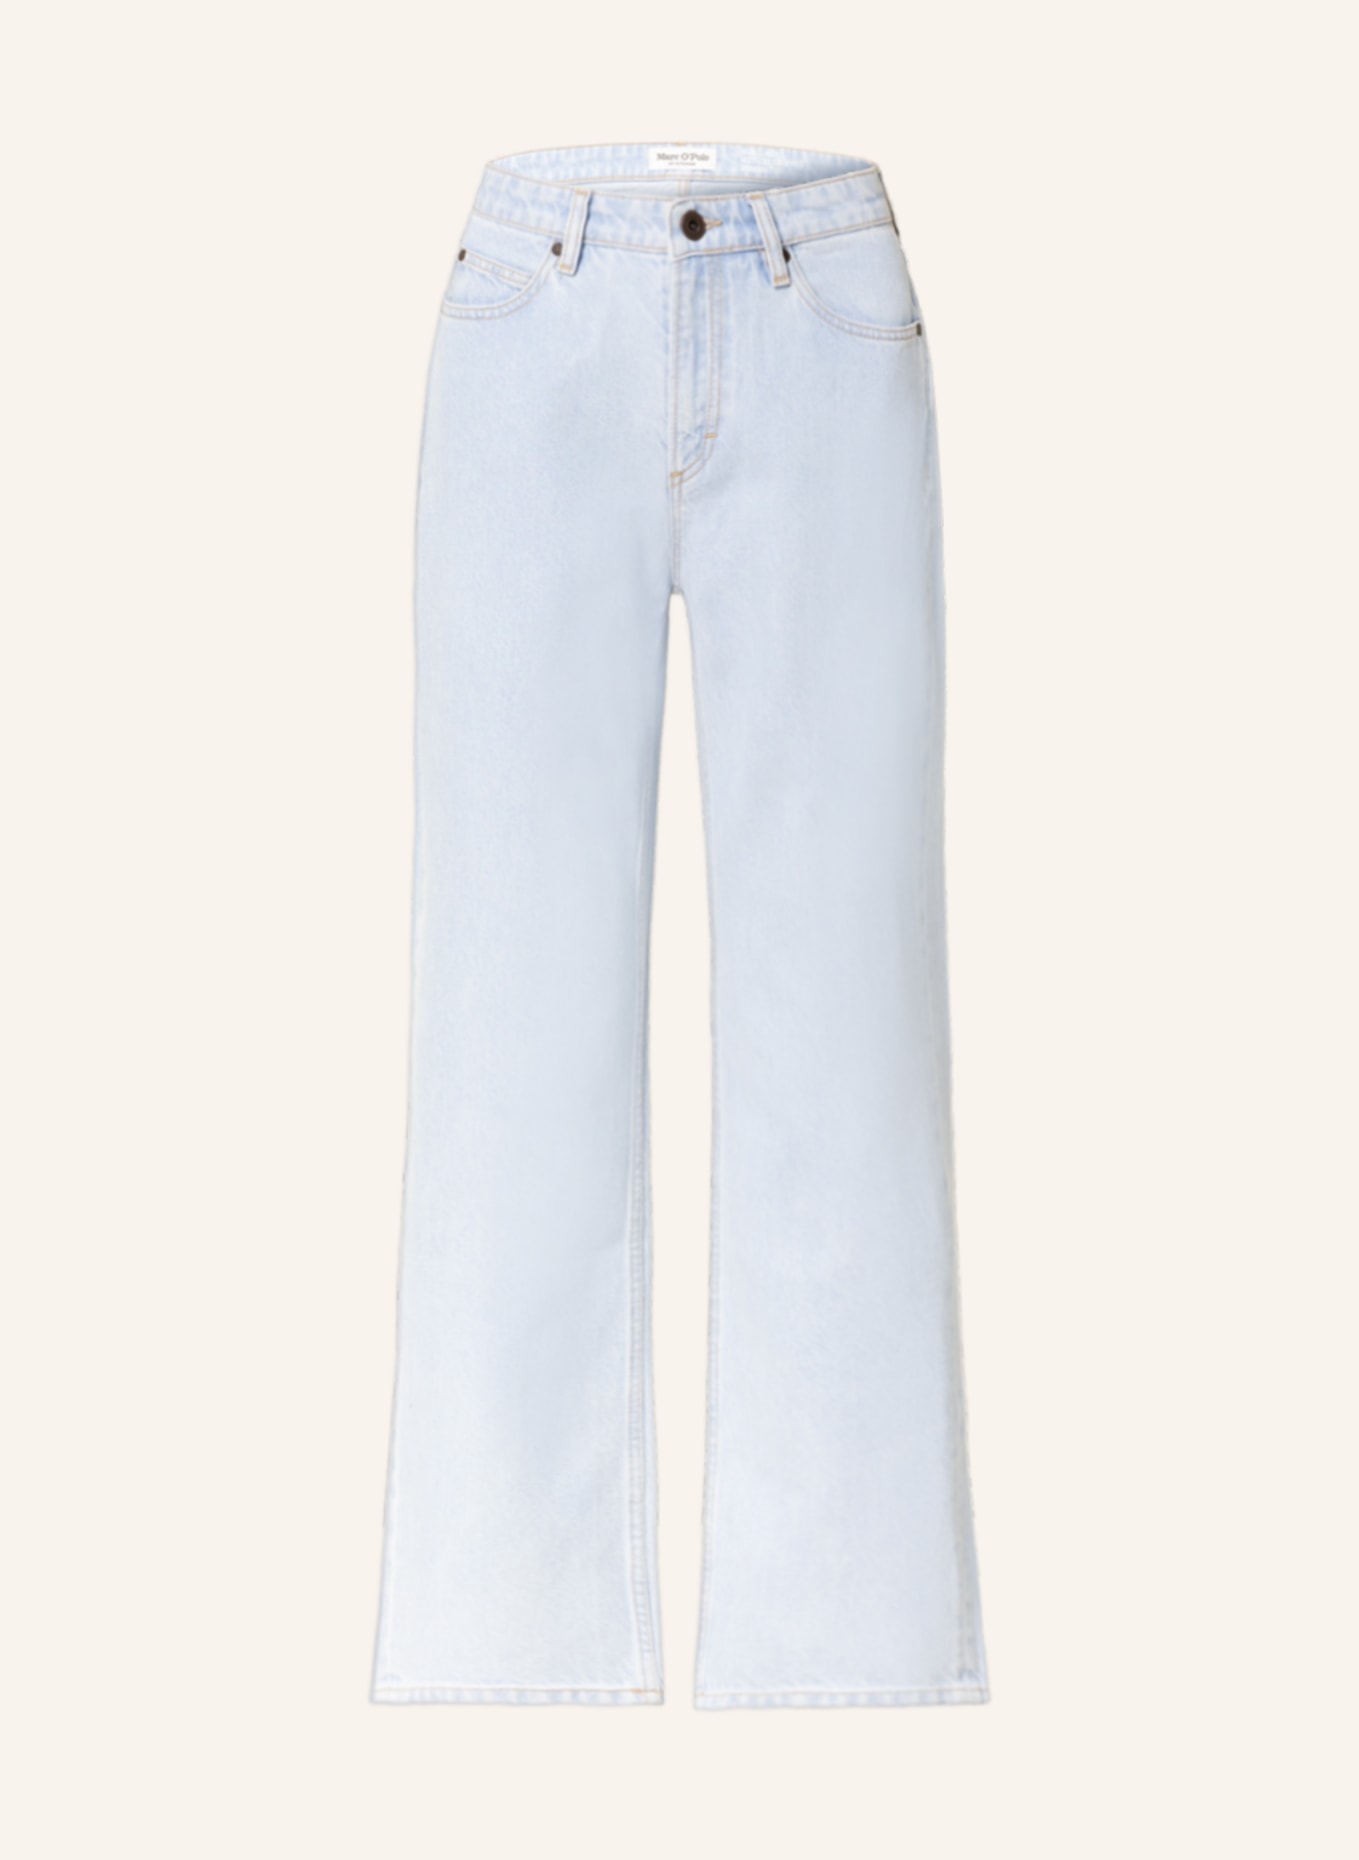 Marc O'Polo Straight Jeans, Farbe: 001 Clean bright ice blue wash (Bild 1)